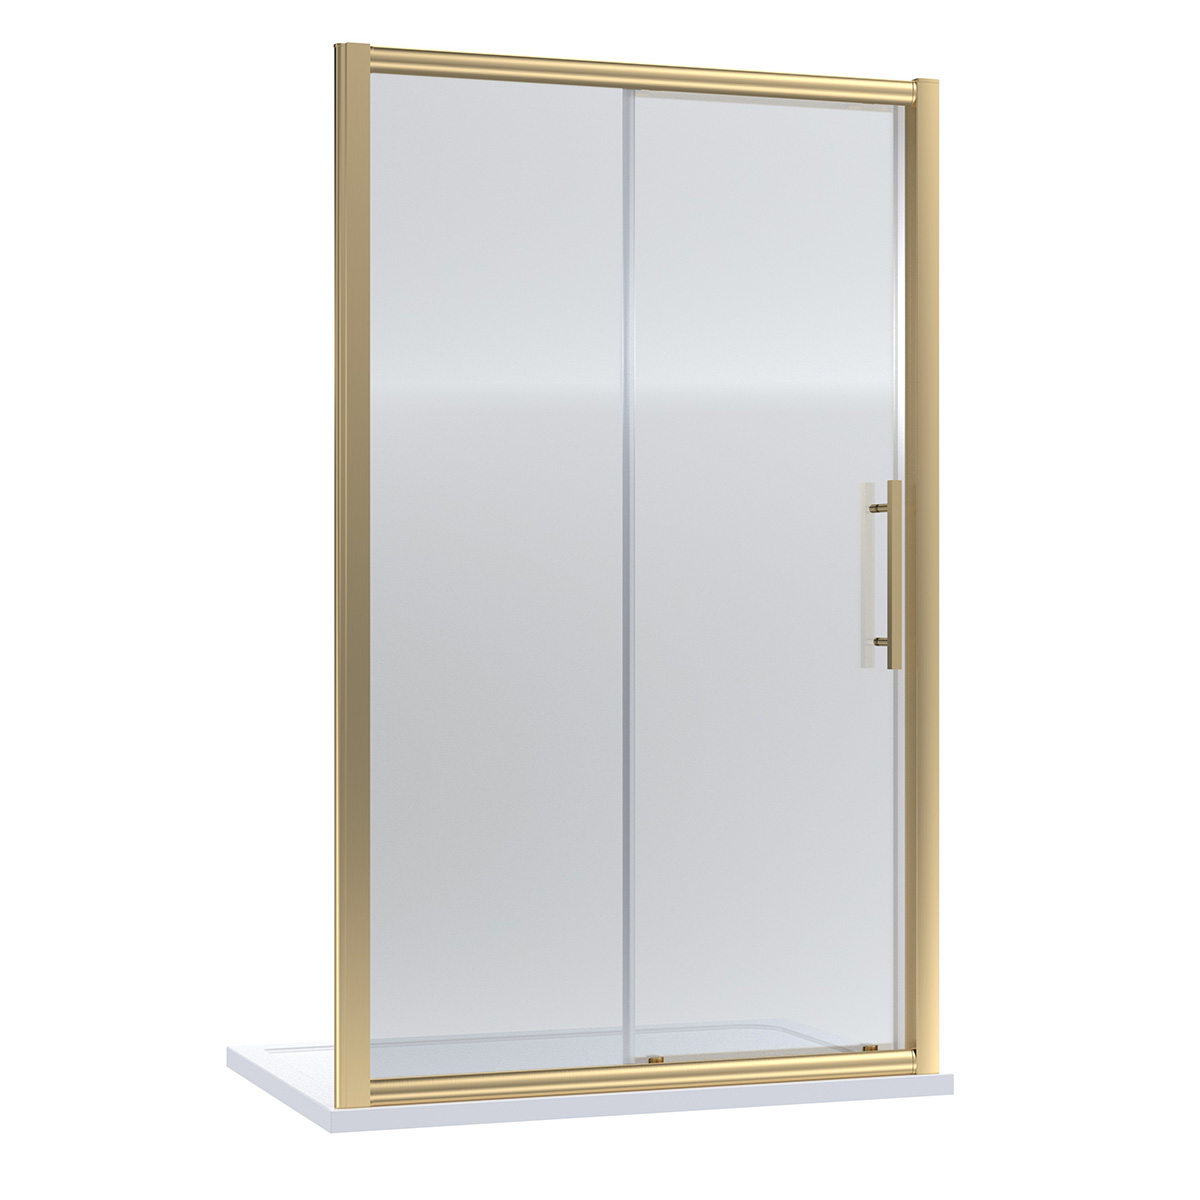 Hudson Reed 1400mm Sliding Shower Door with Square Handle - Brushed Brass